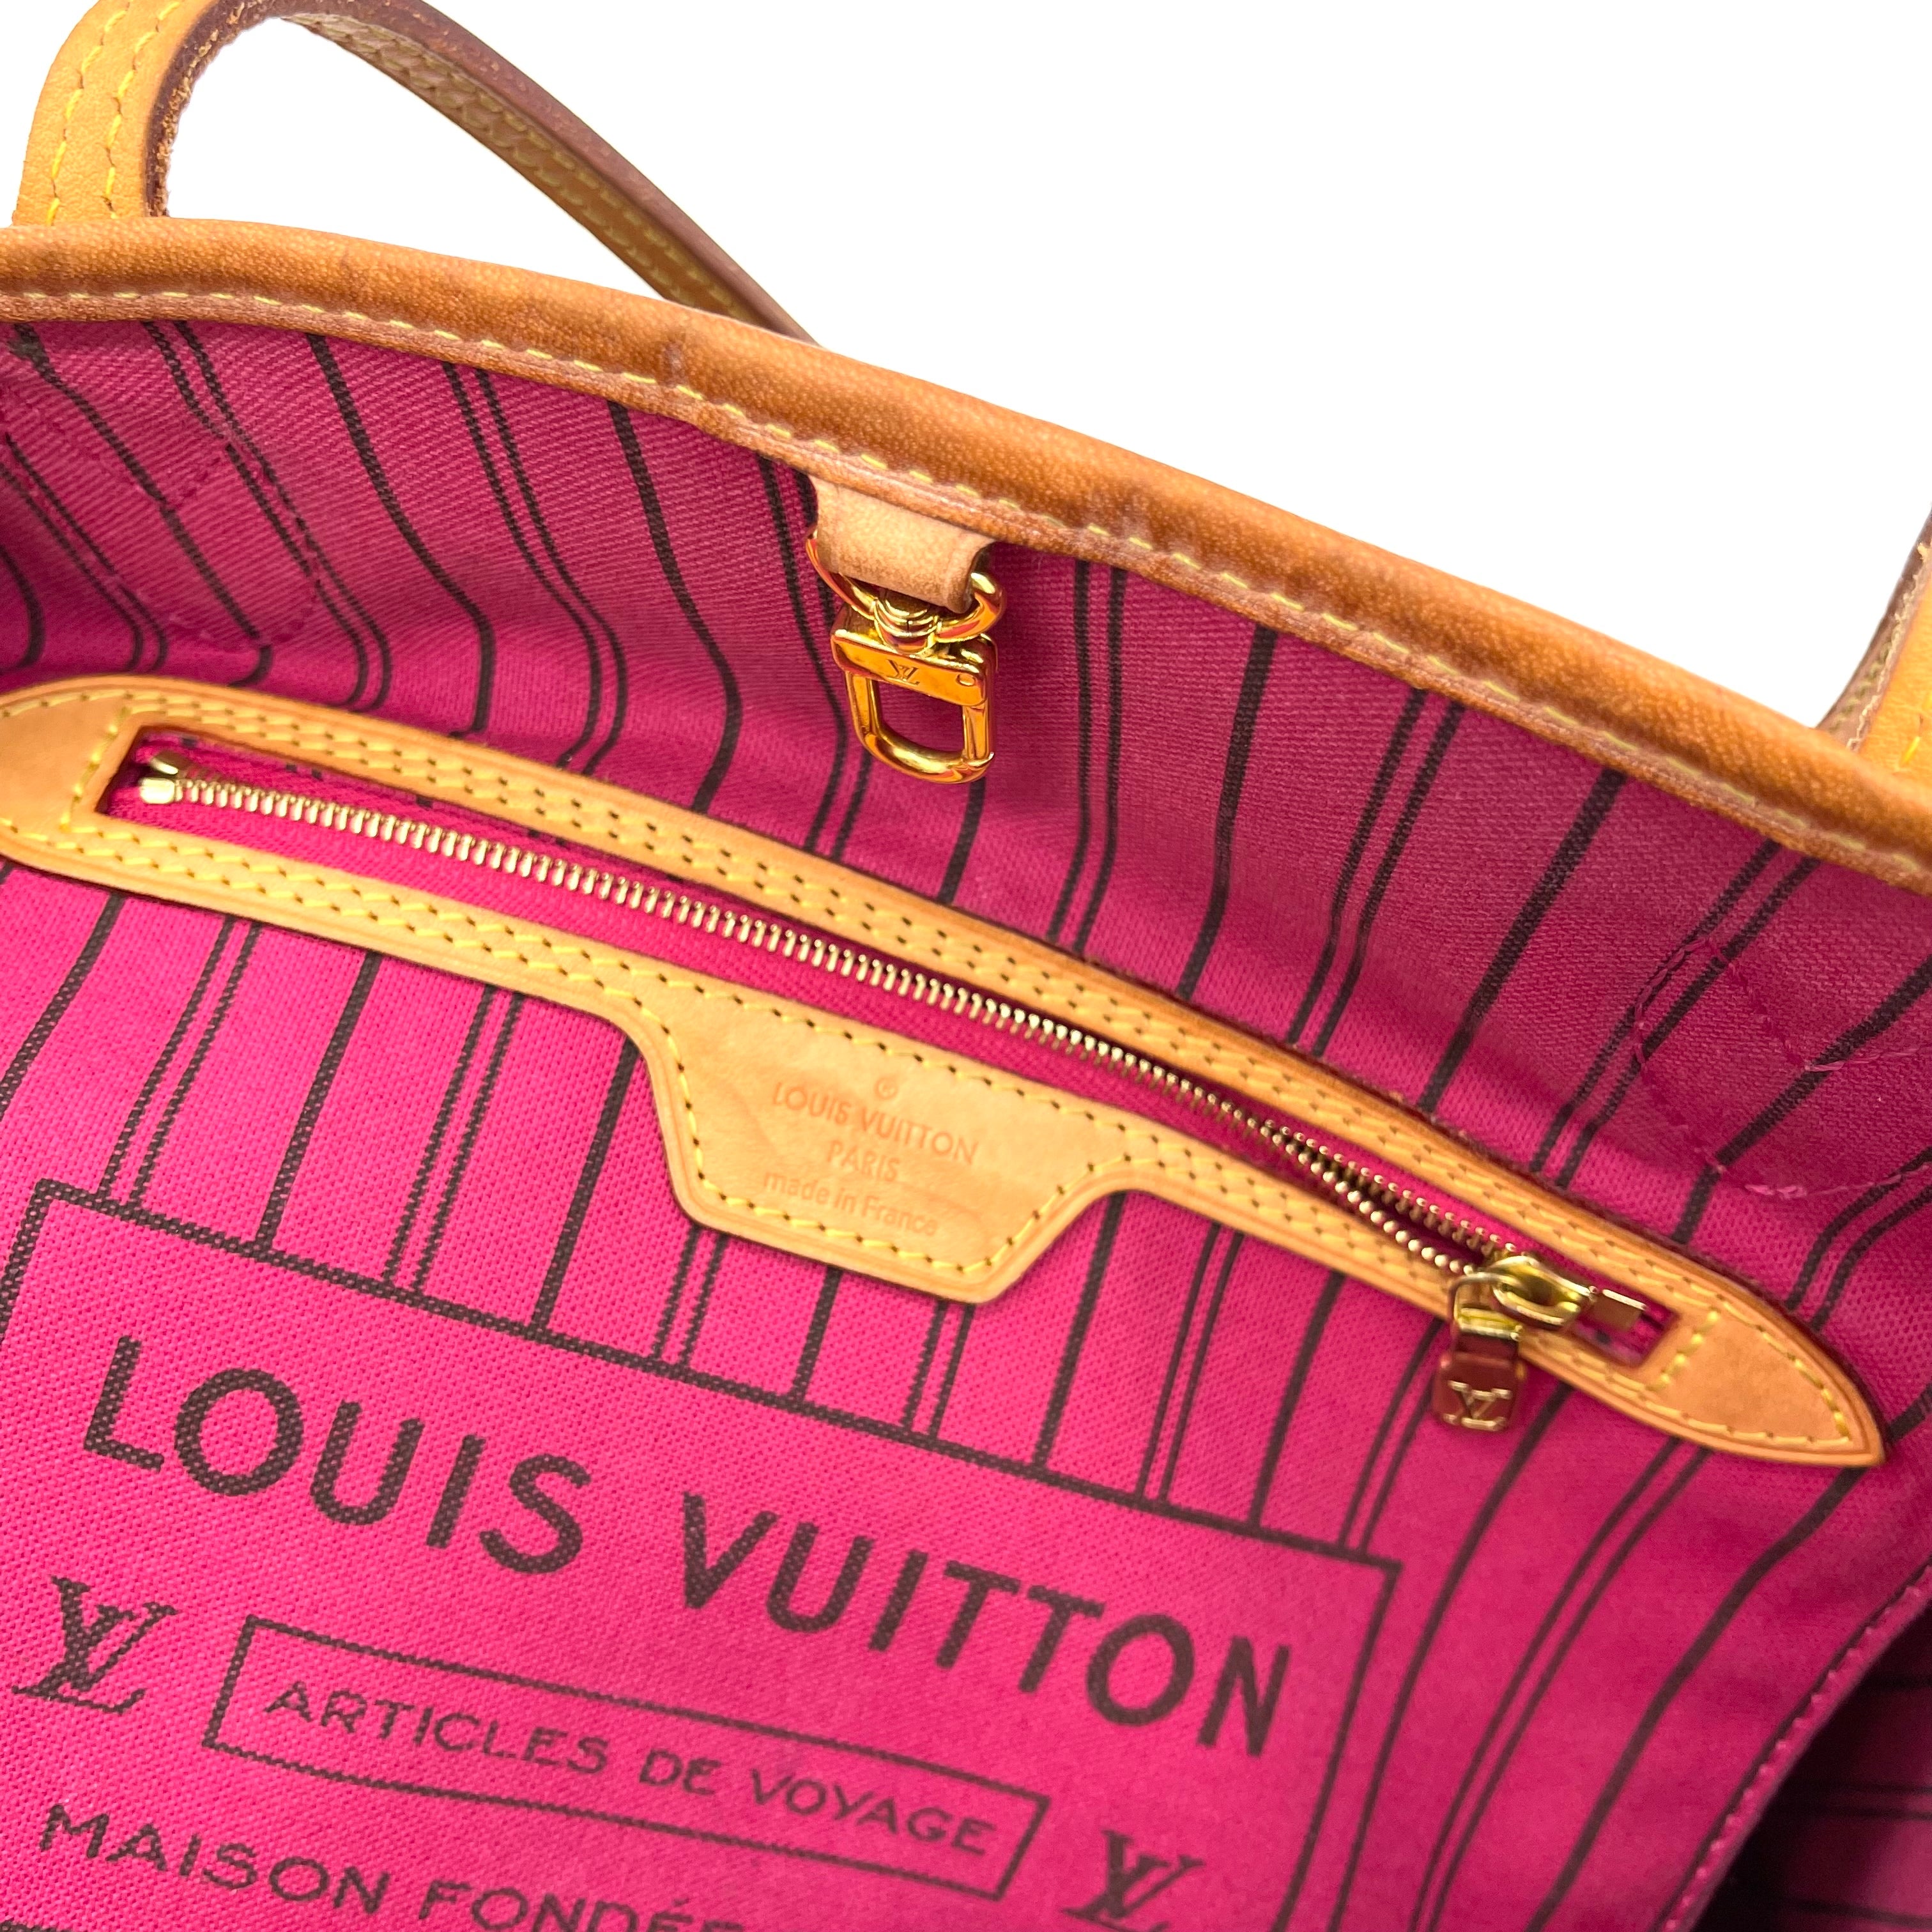 Louis Vuitton Monogram Neverfull PM